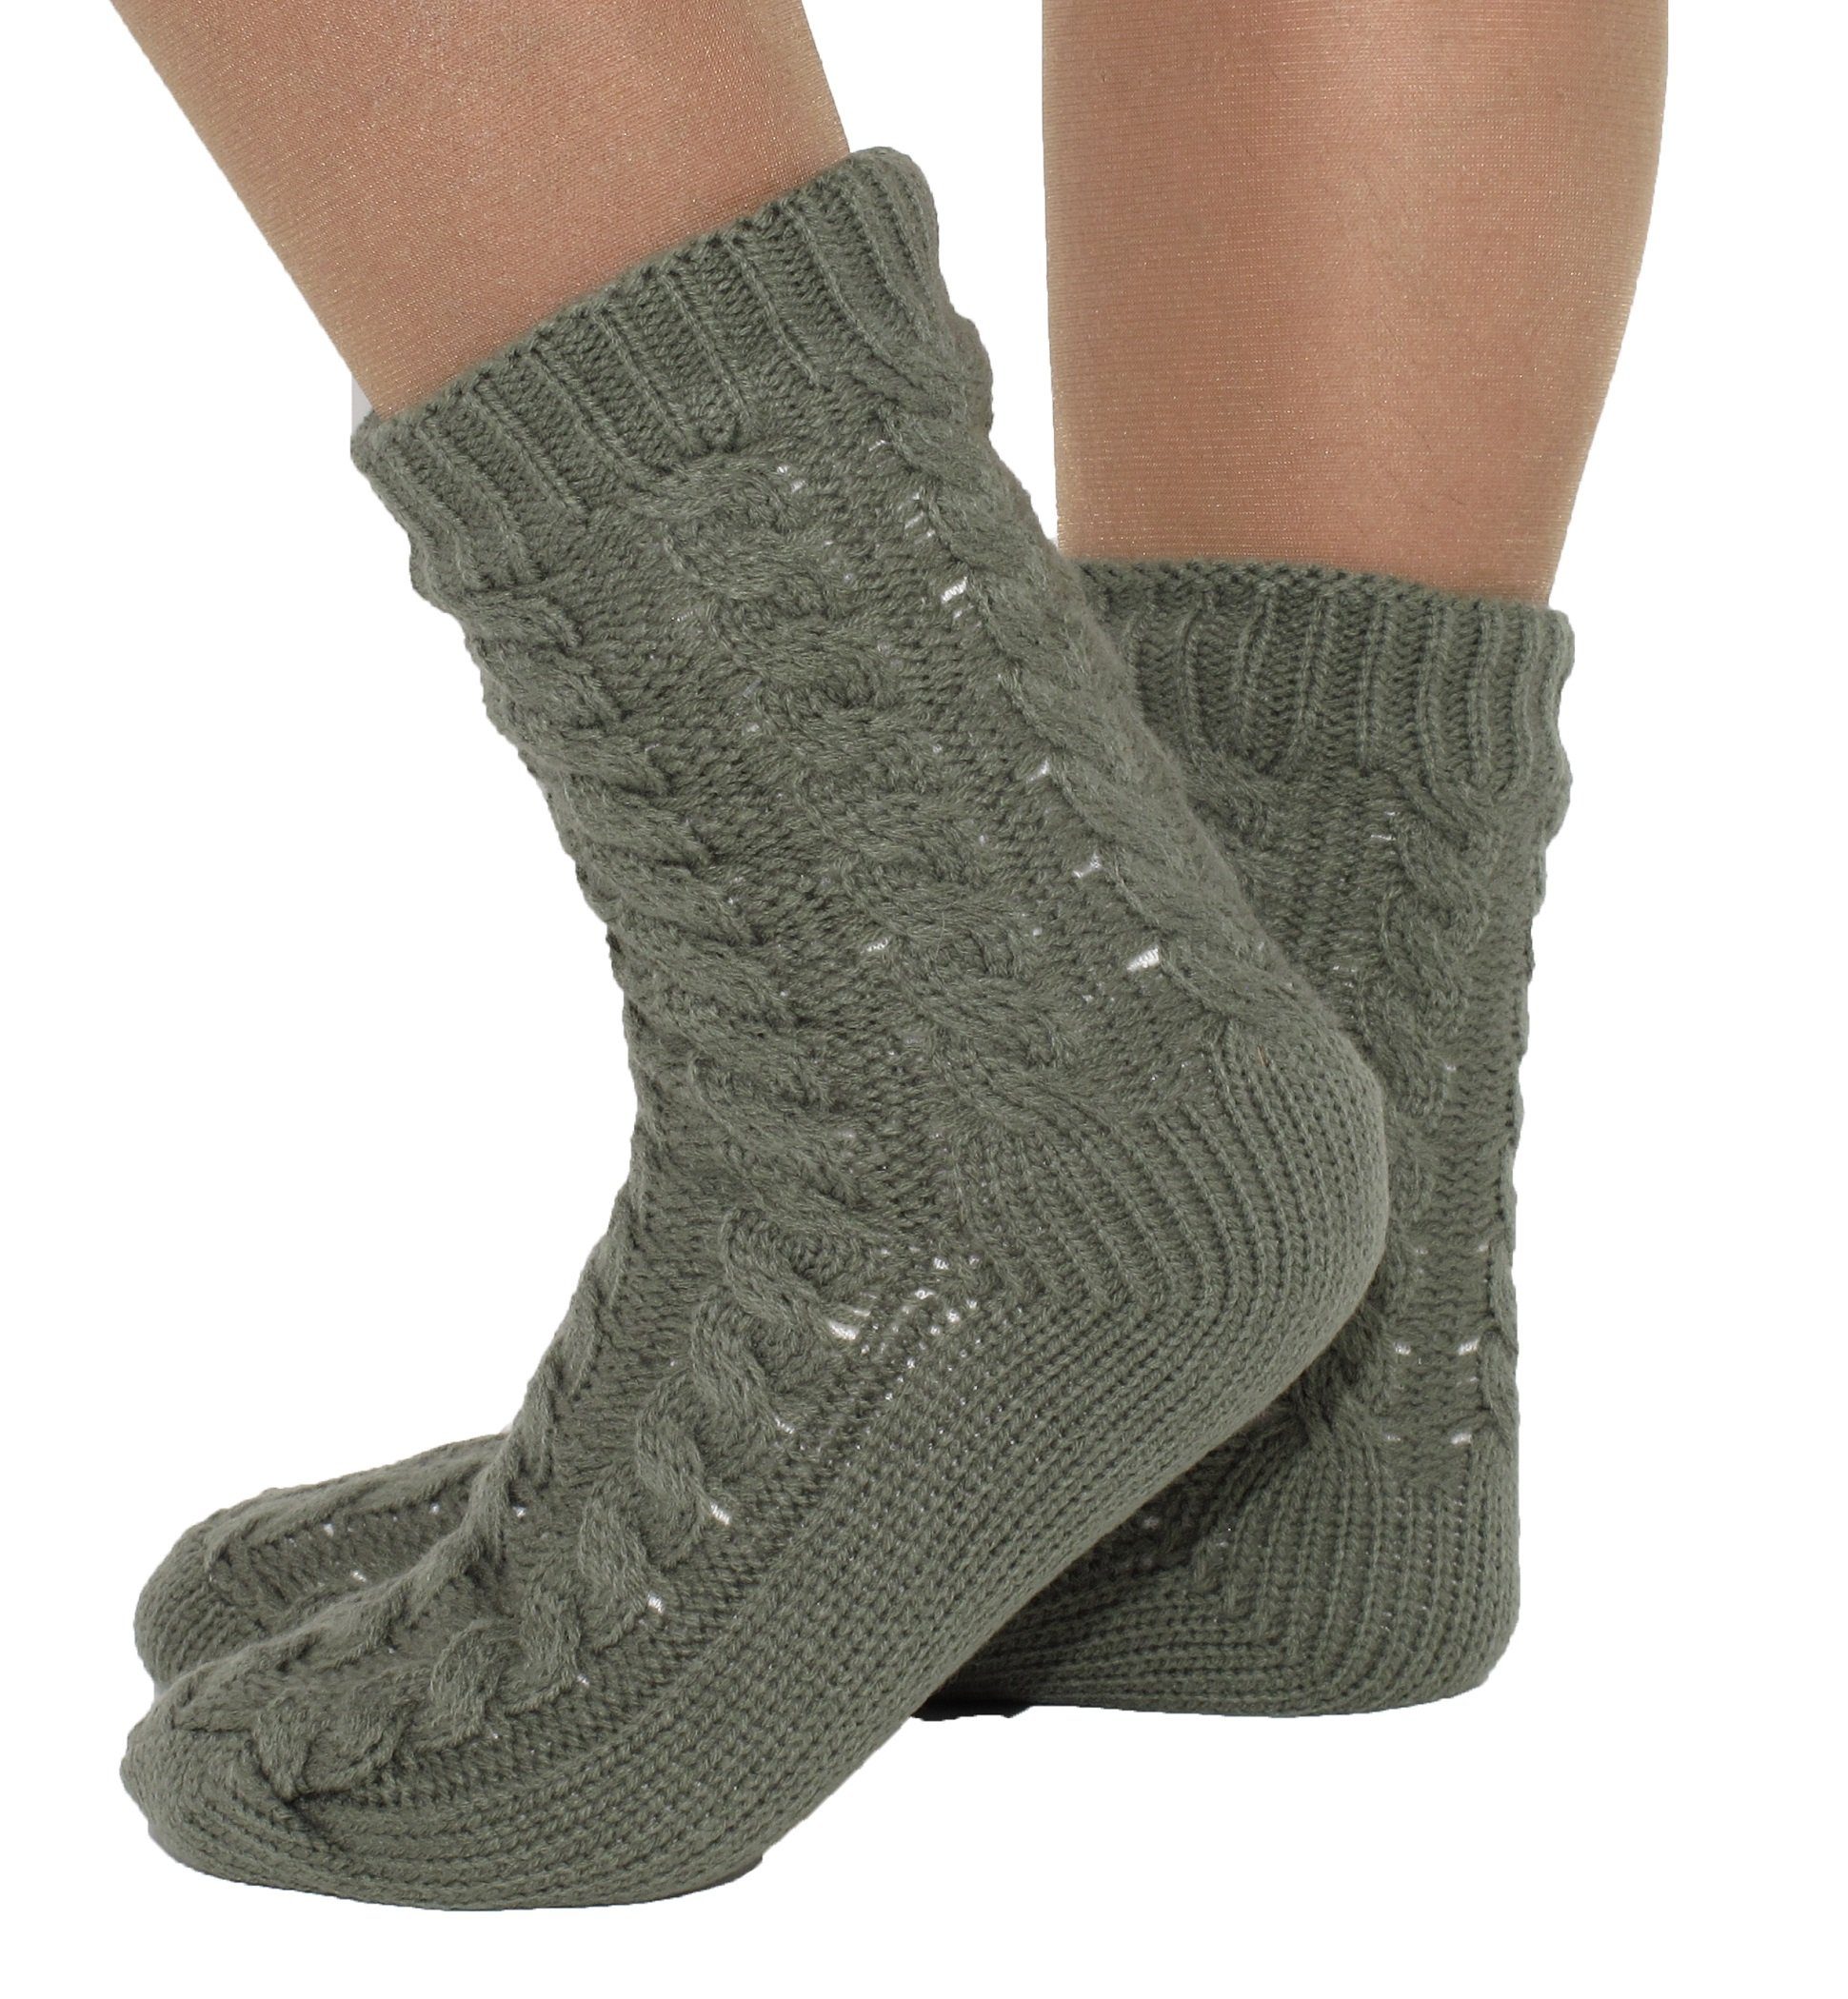 Markenwarenshop-Style М'які шкарпеточки Hüttensocken Шкарпетки для дому Шкарпетки Teddy Strickmuster Zopf 39-42 Farbe: